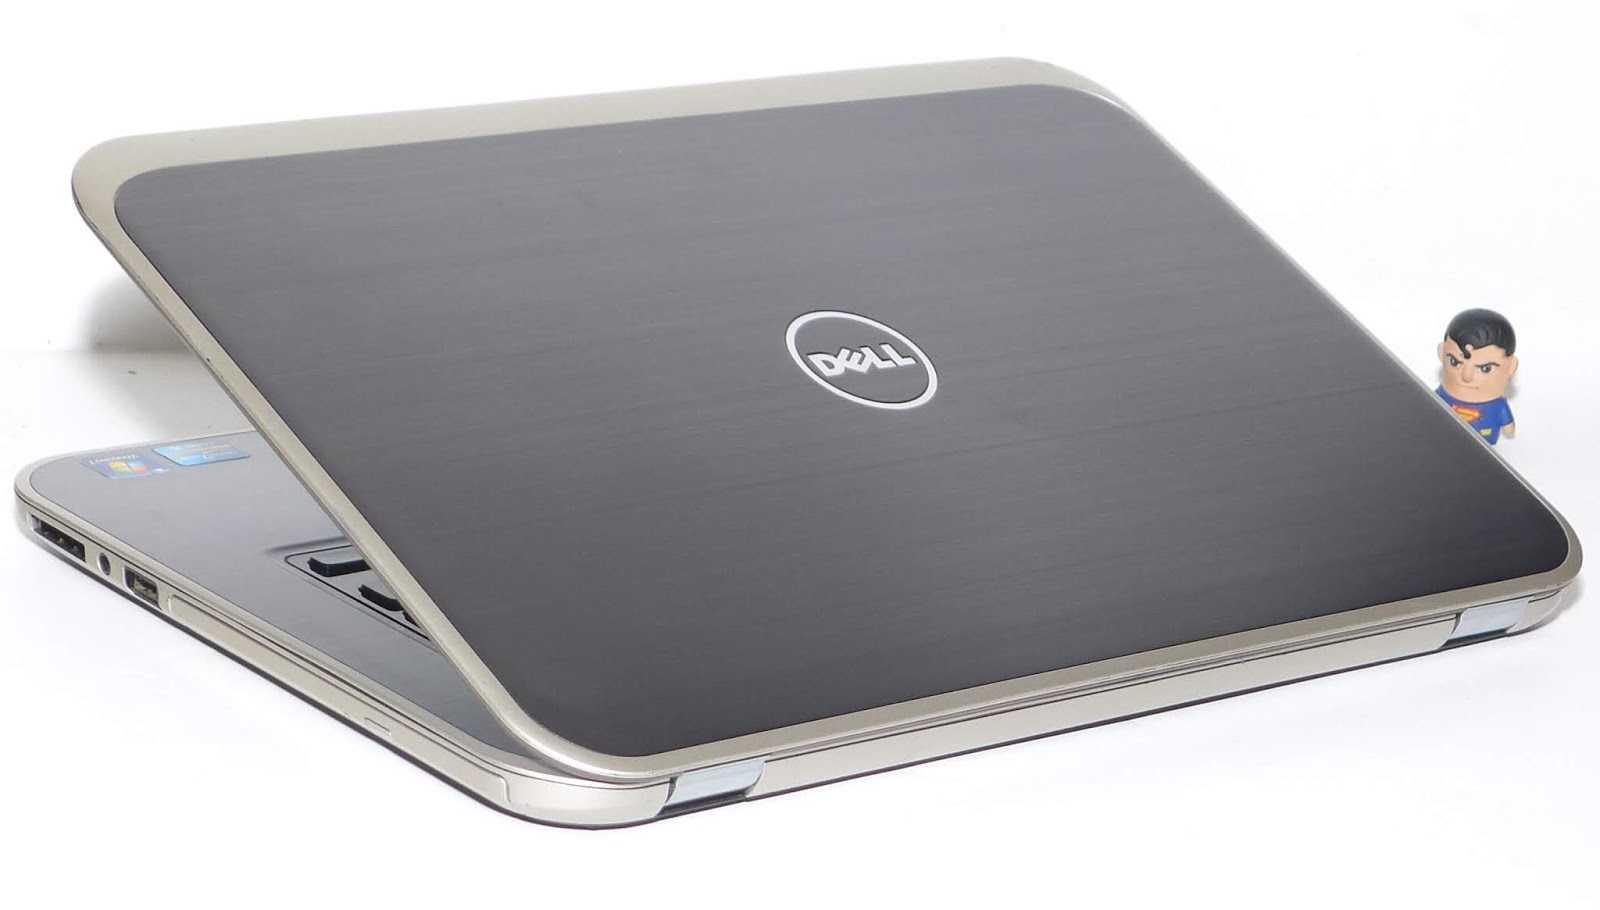 Dell inspiron 5721 (5721hi3317d8c1000lsilver) ᐈ потрібно купити ноутбук?